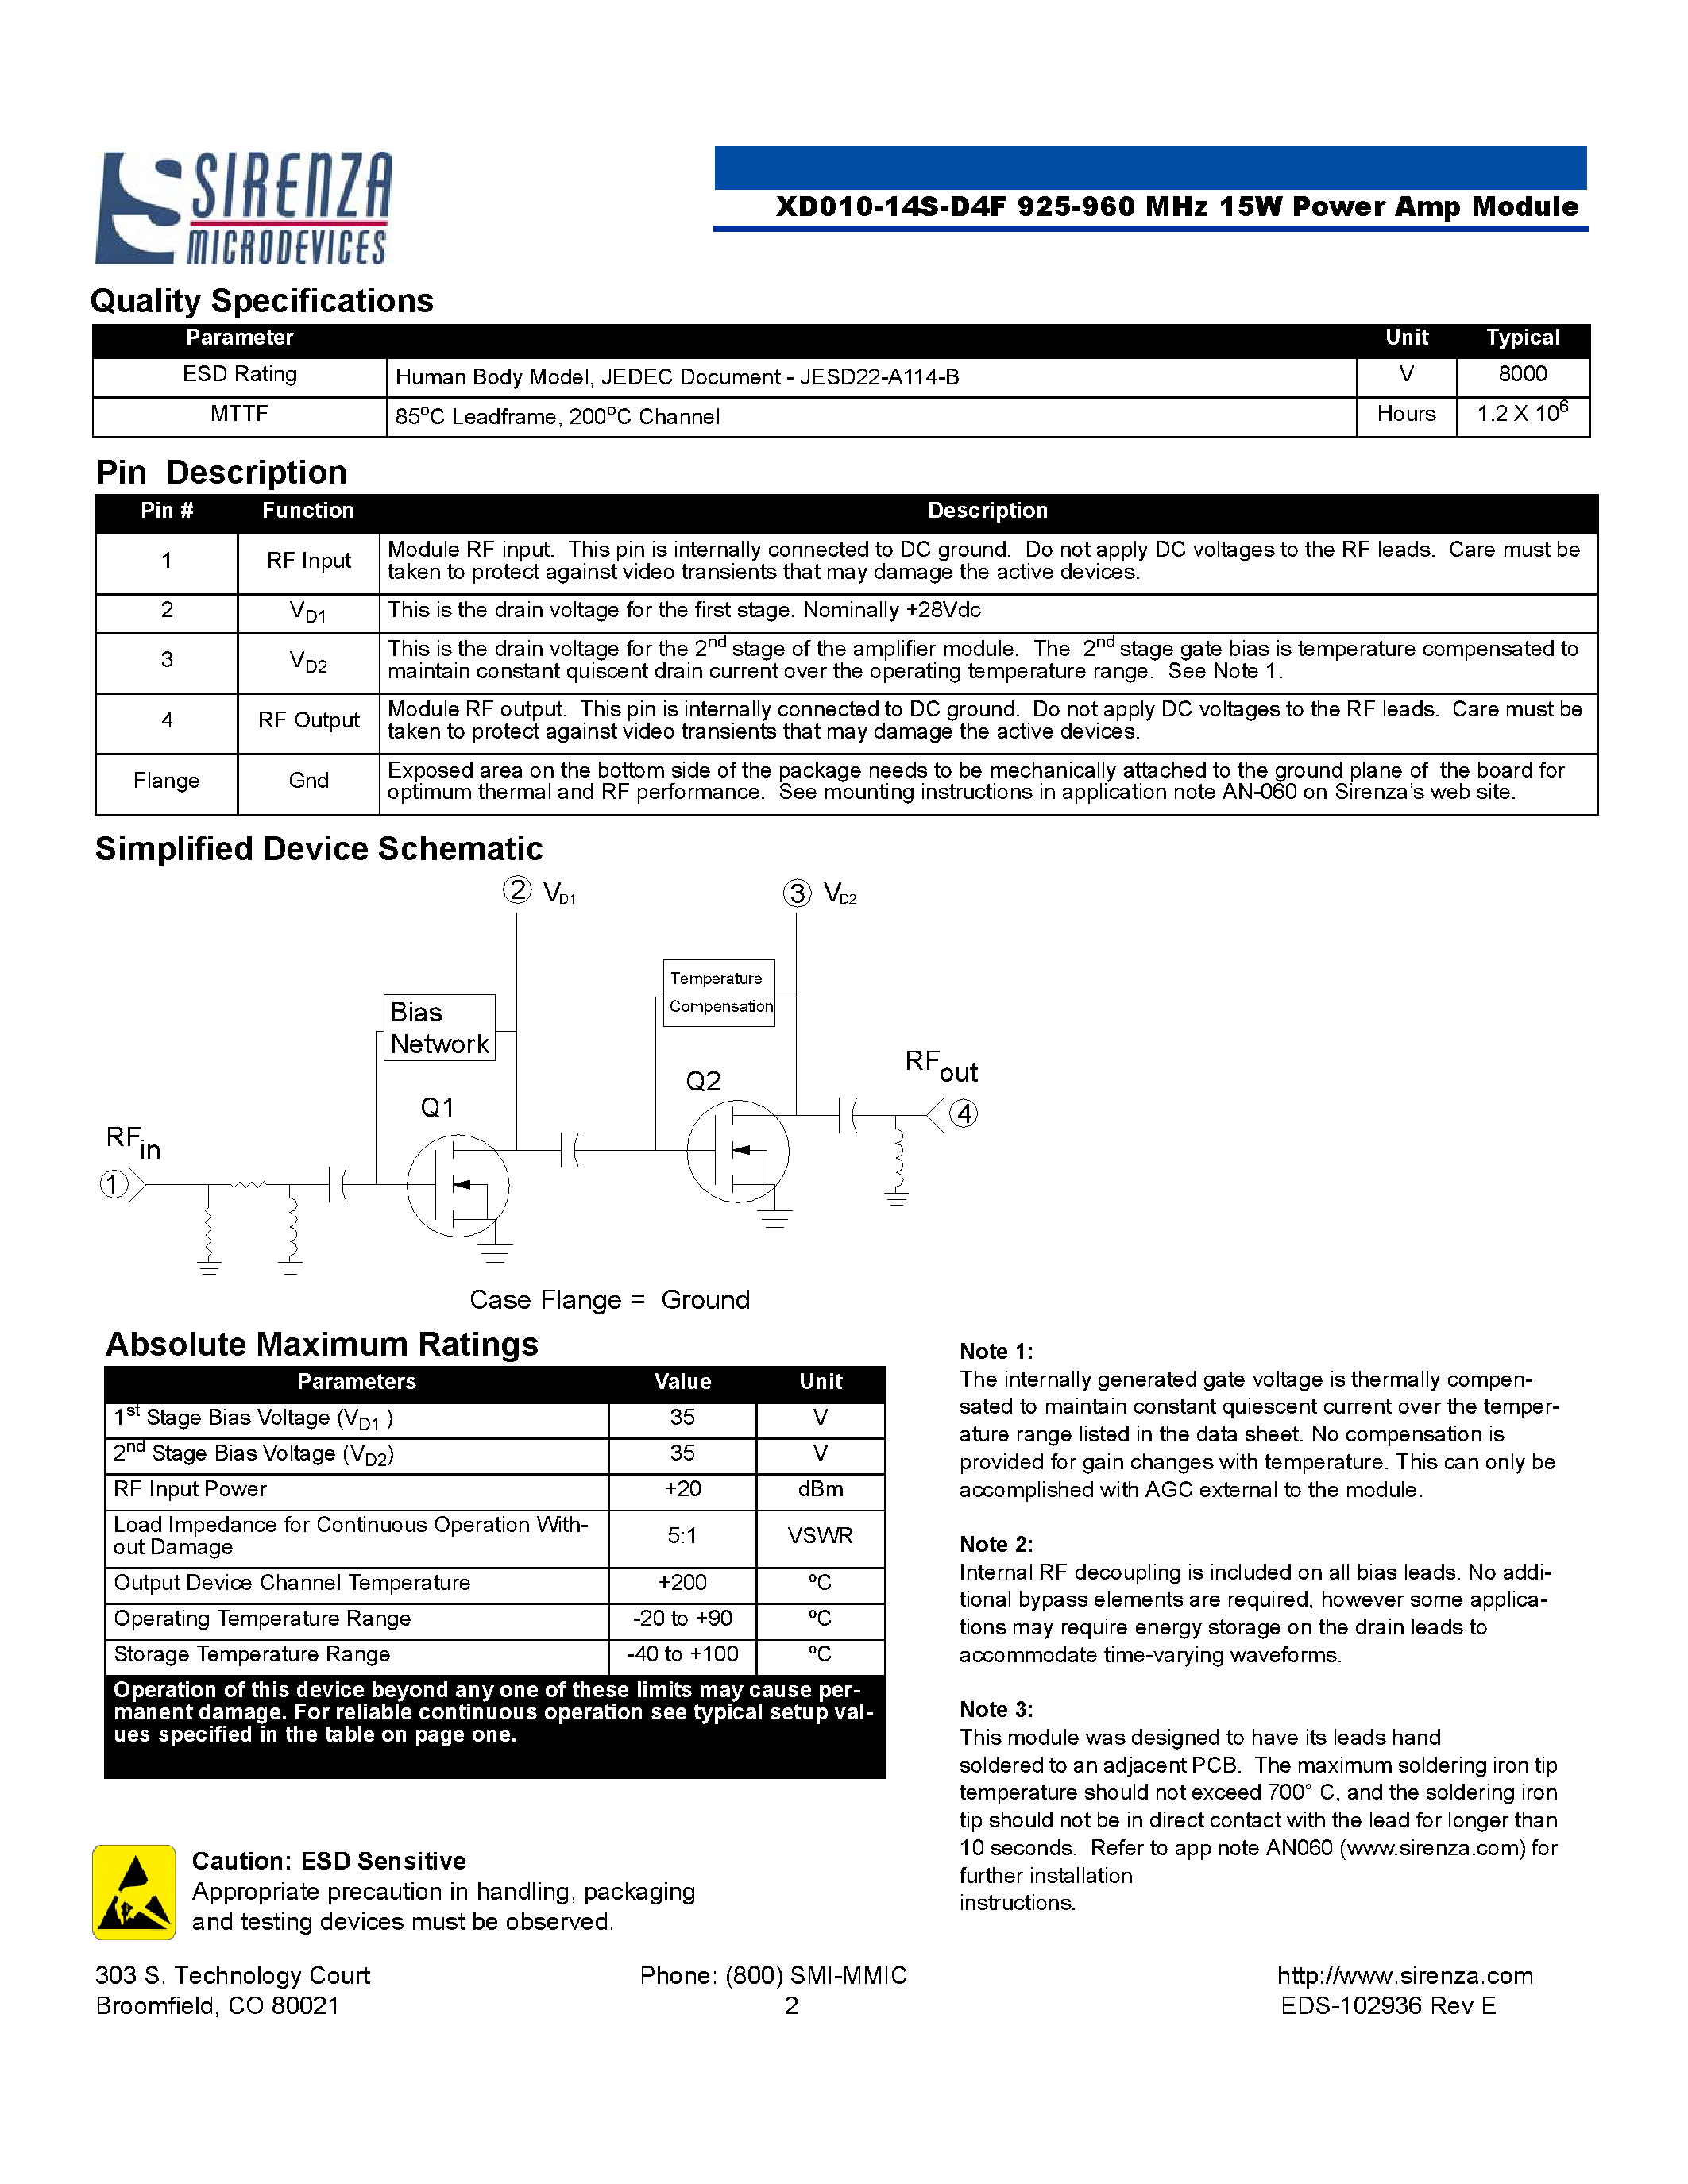 Datasheet XD010-14S-D4F - Class A/AB 15W Power Amplifier Module page 2